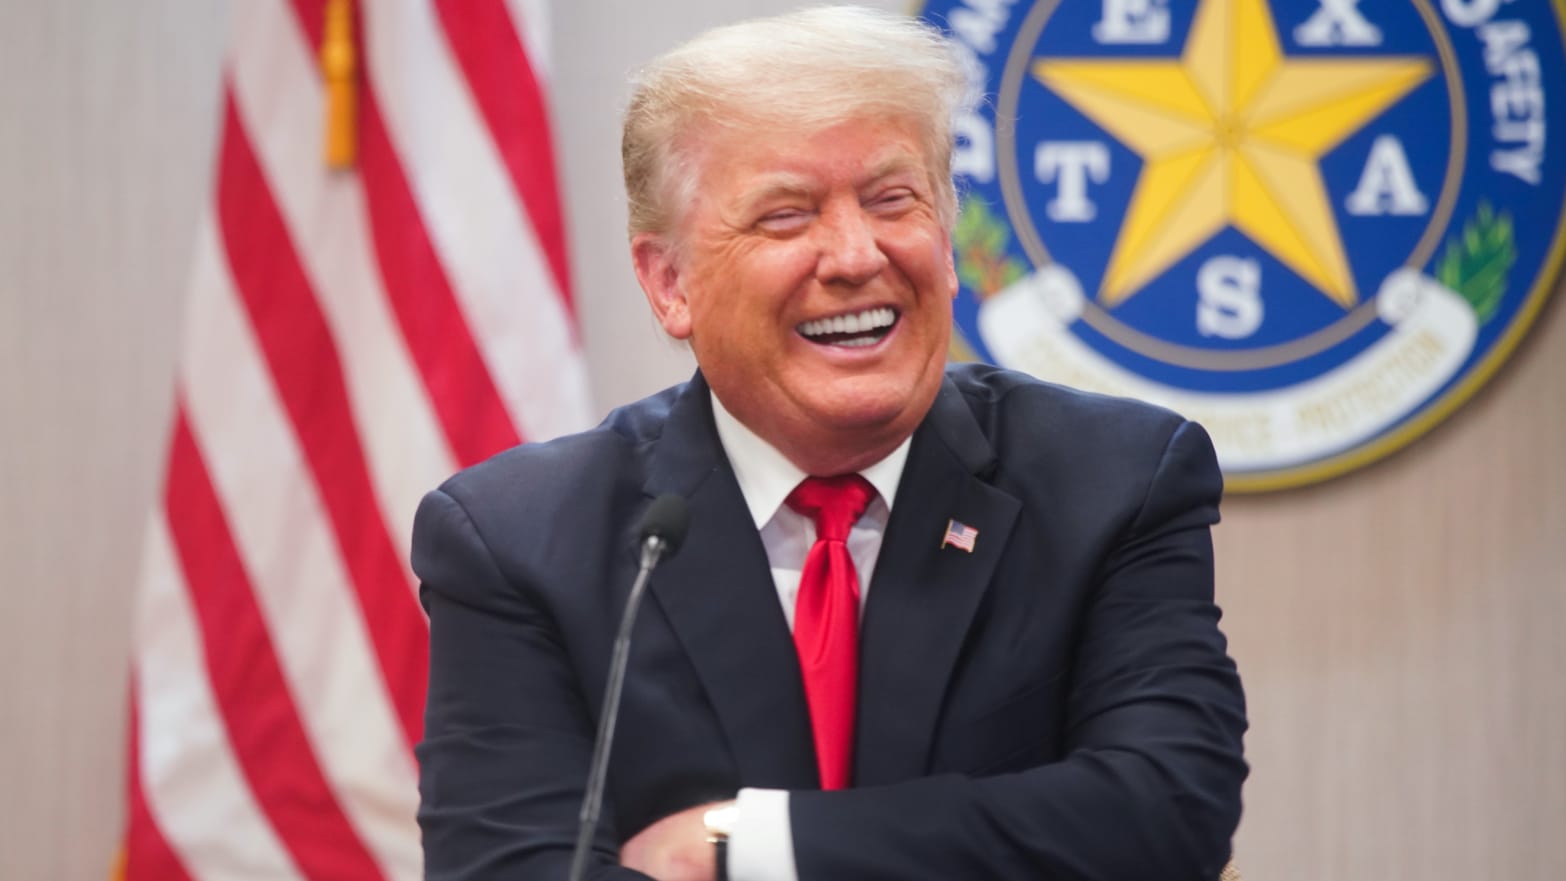 Donald Trump laughs behind a lectern.